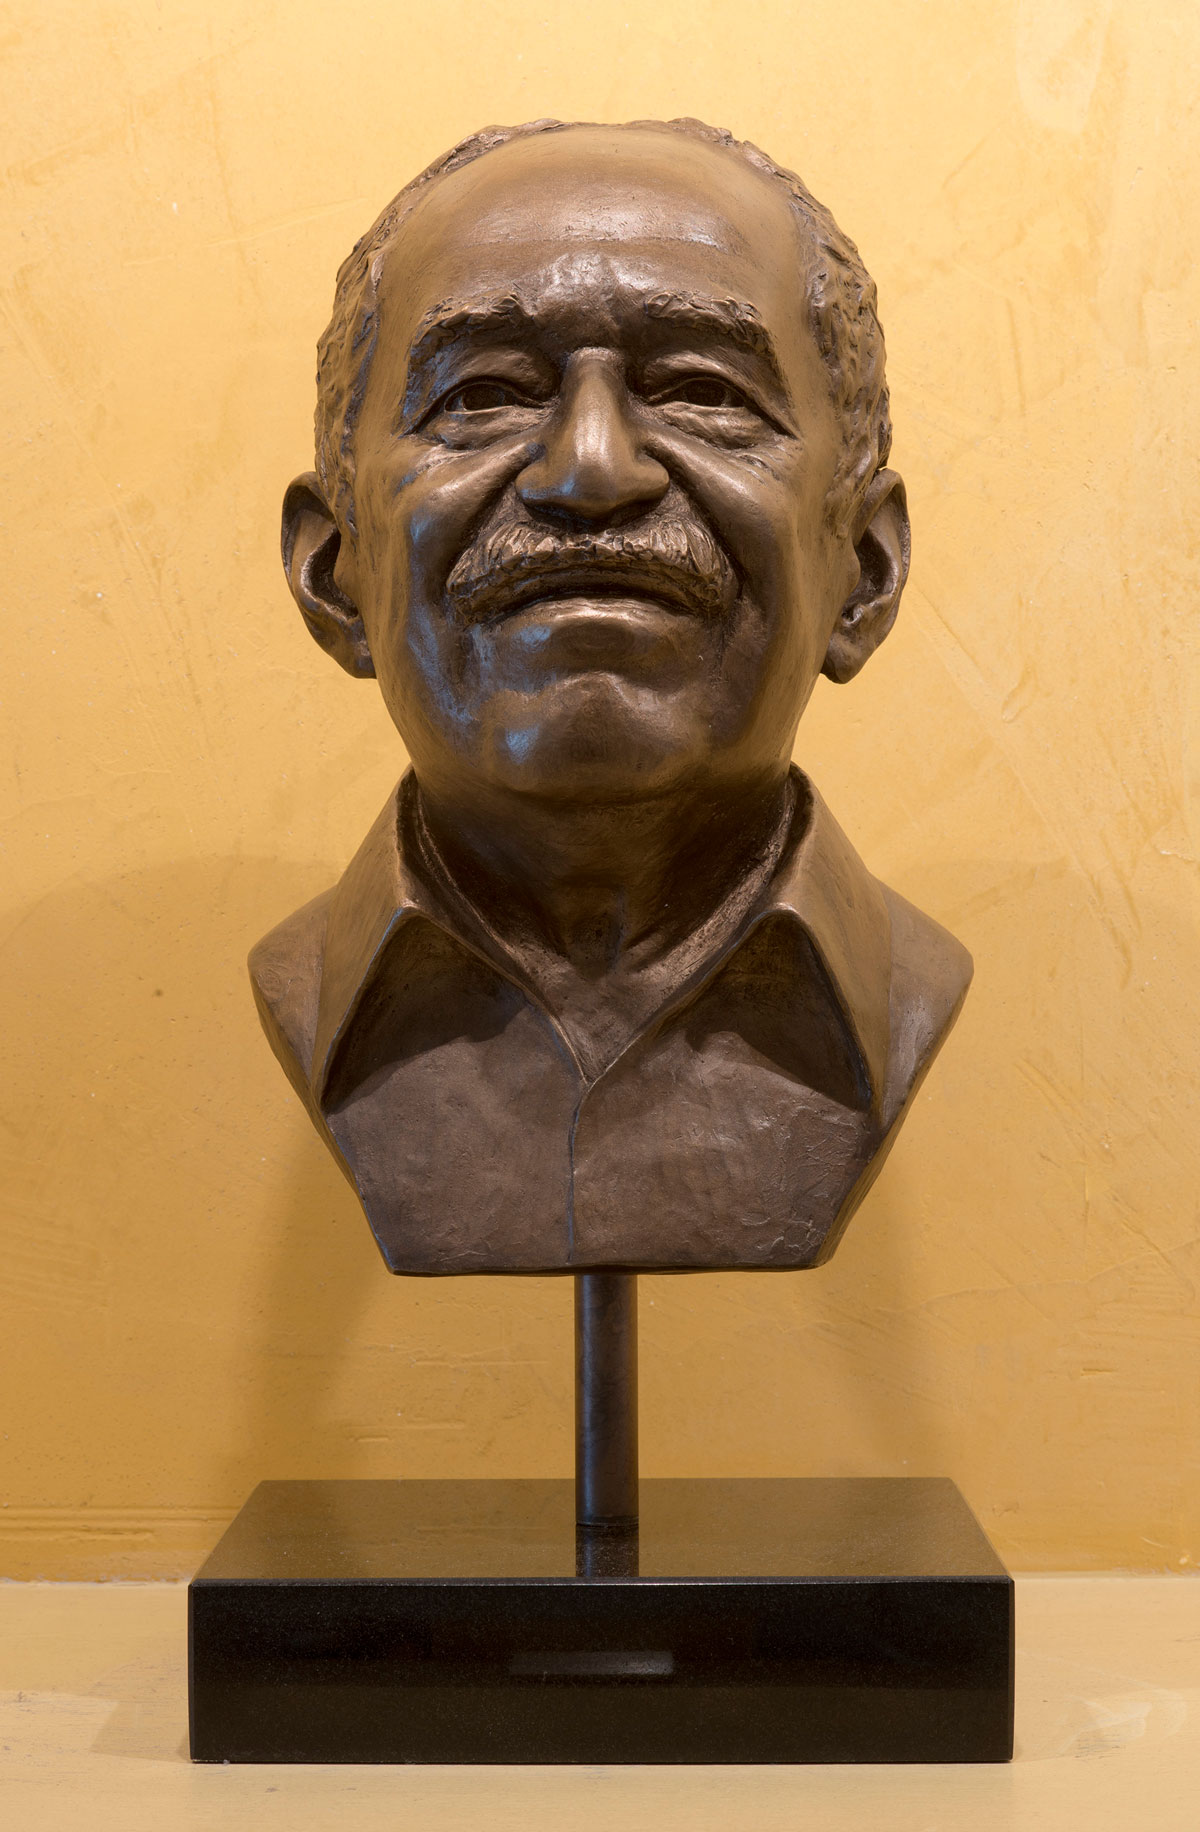 A bronze bust of Gabriel García Márquez by artist Kate Murray. Photo by Pete Smith.